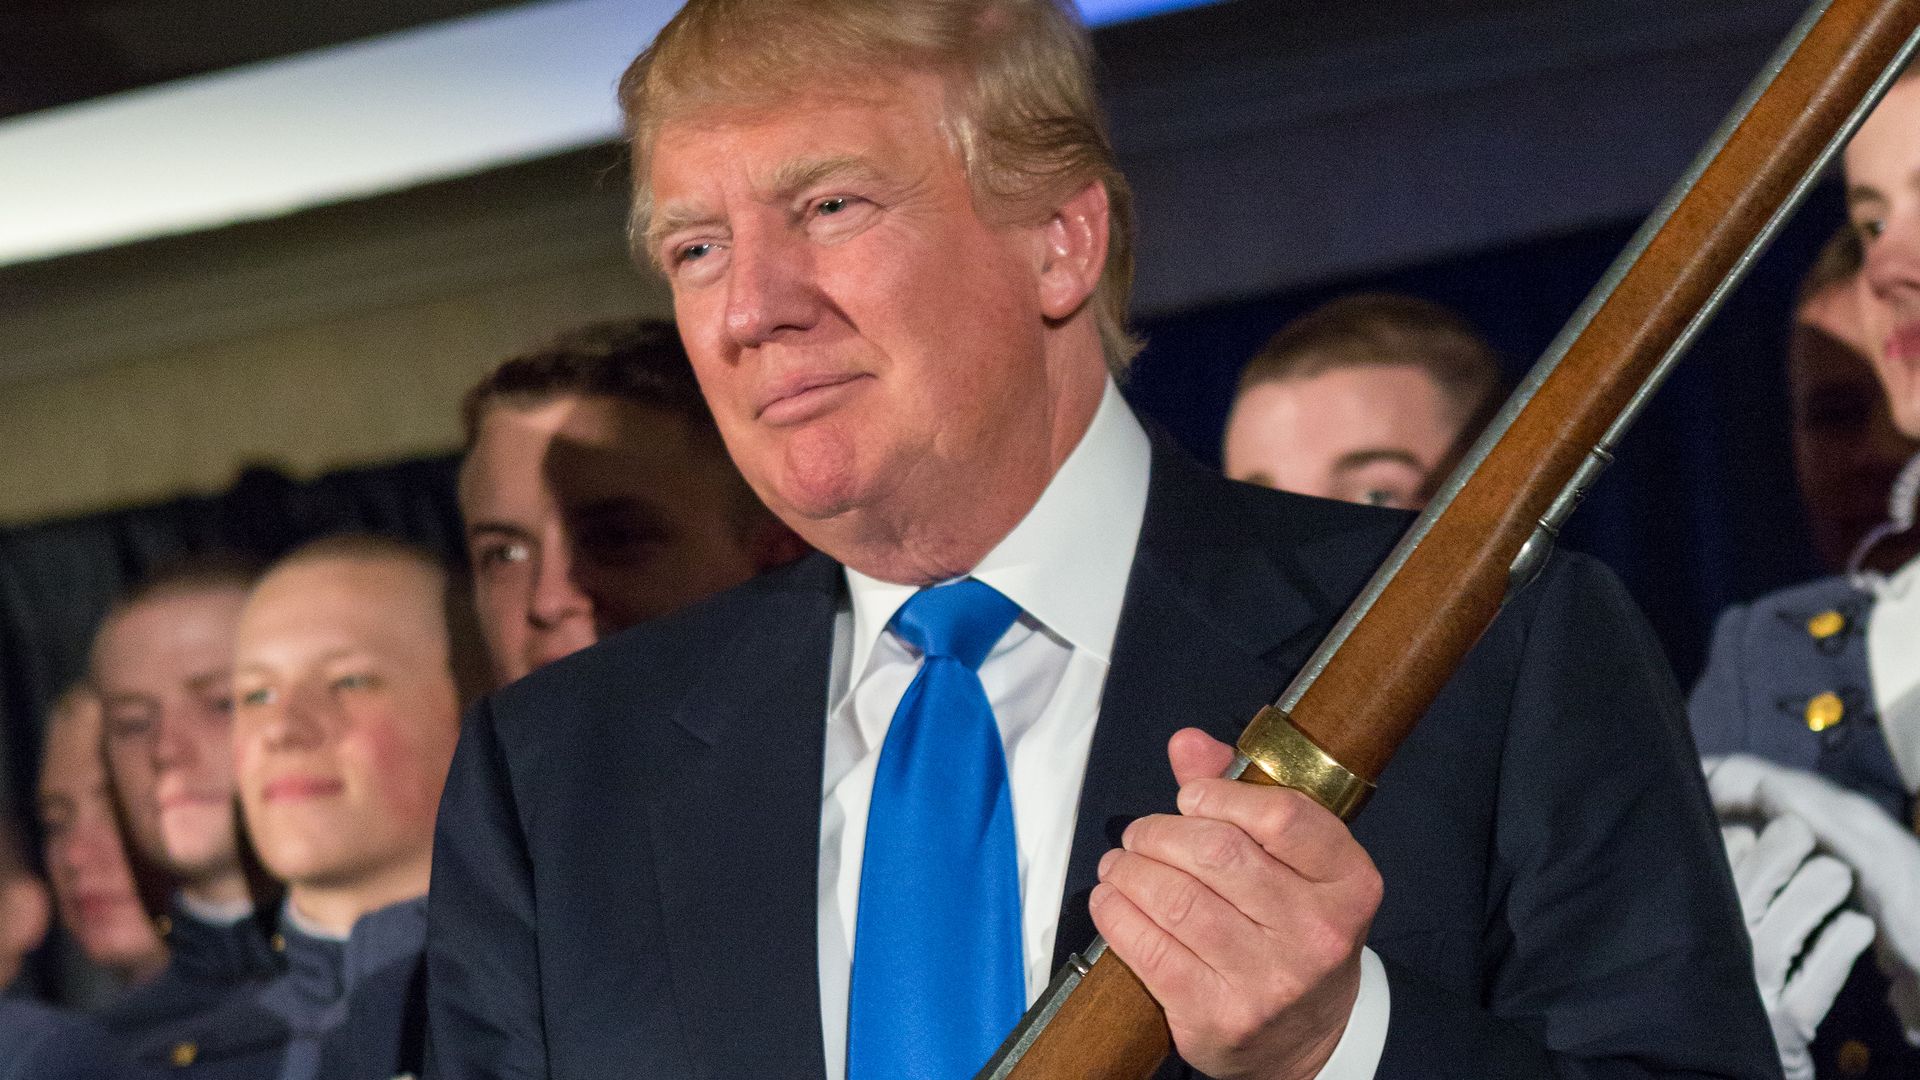 Donald Trump holding a flintlock rifle